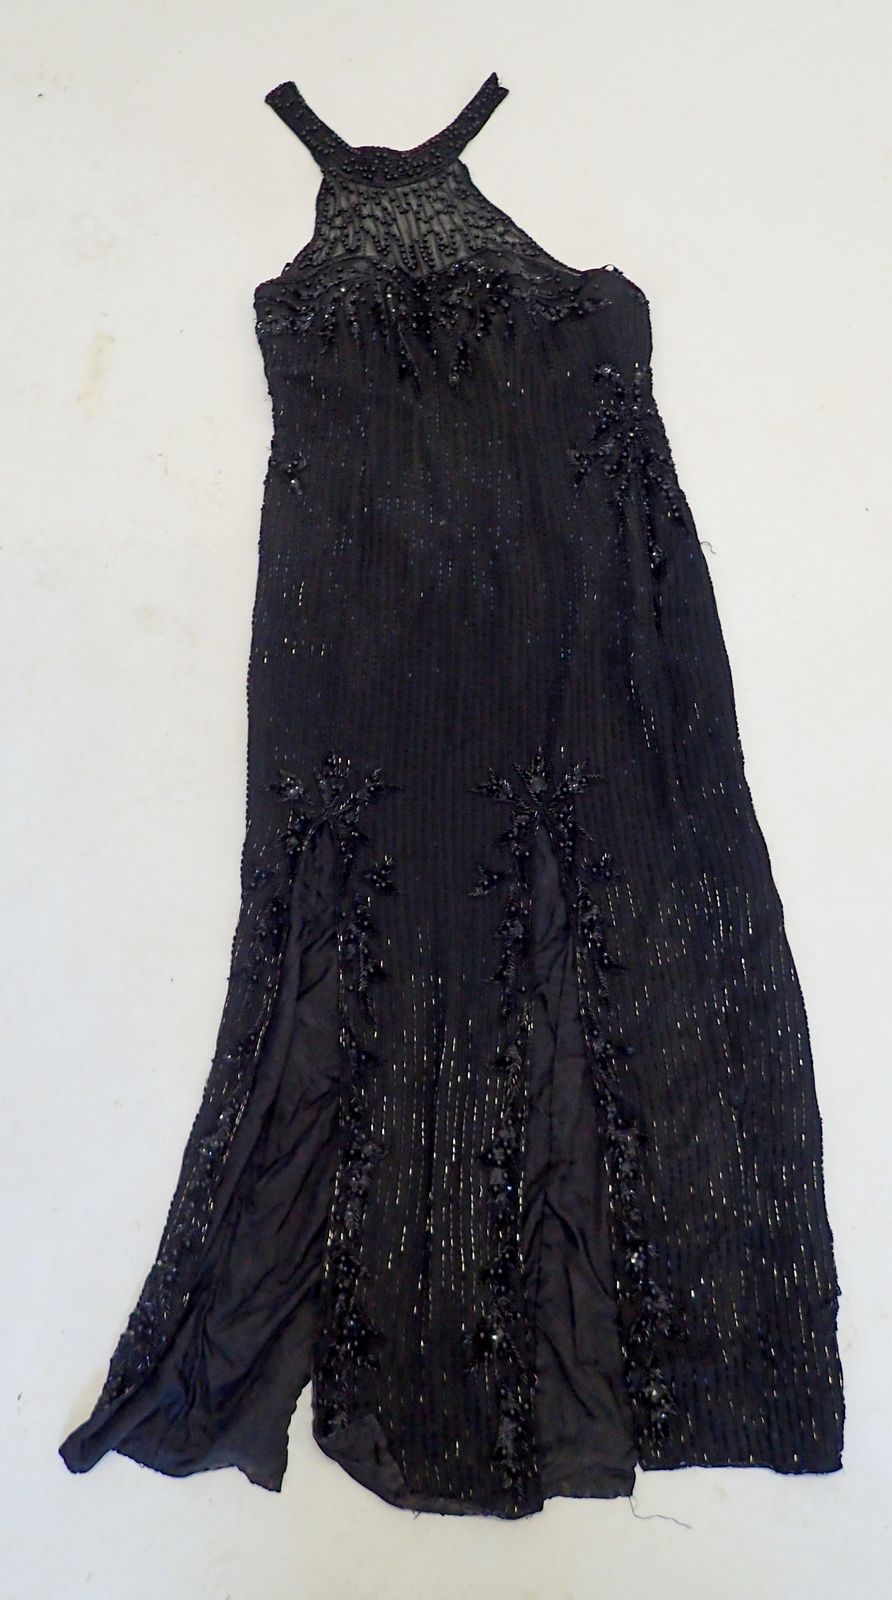 A Diane Freis black bead evening dress, size L